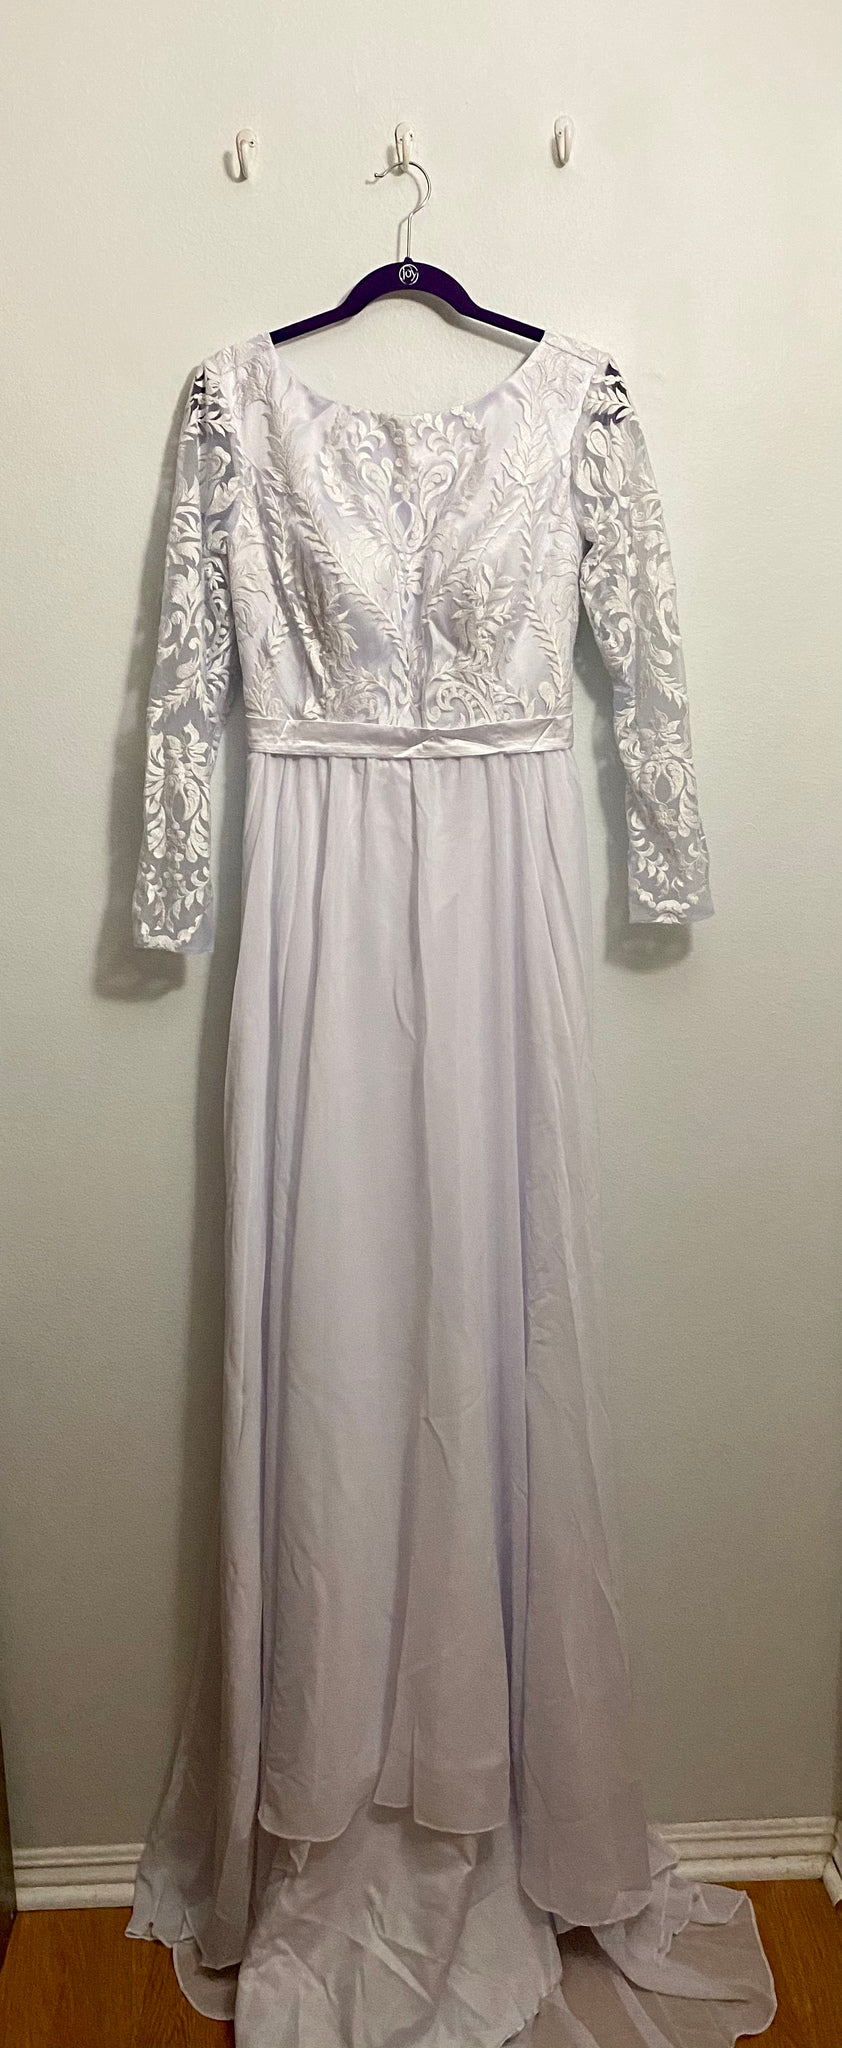 Etsy store 'Bohemian lace wedding dress' wedding dress size-12 NEW